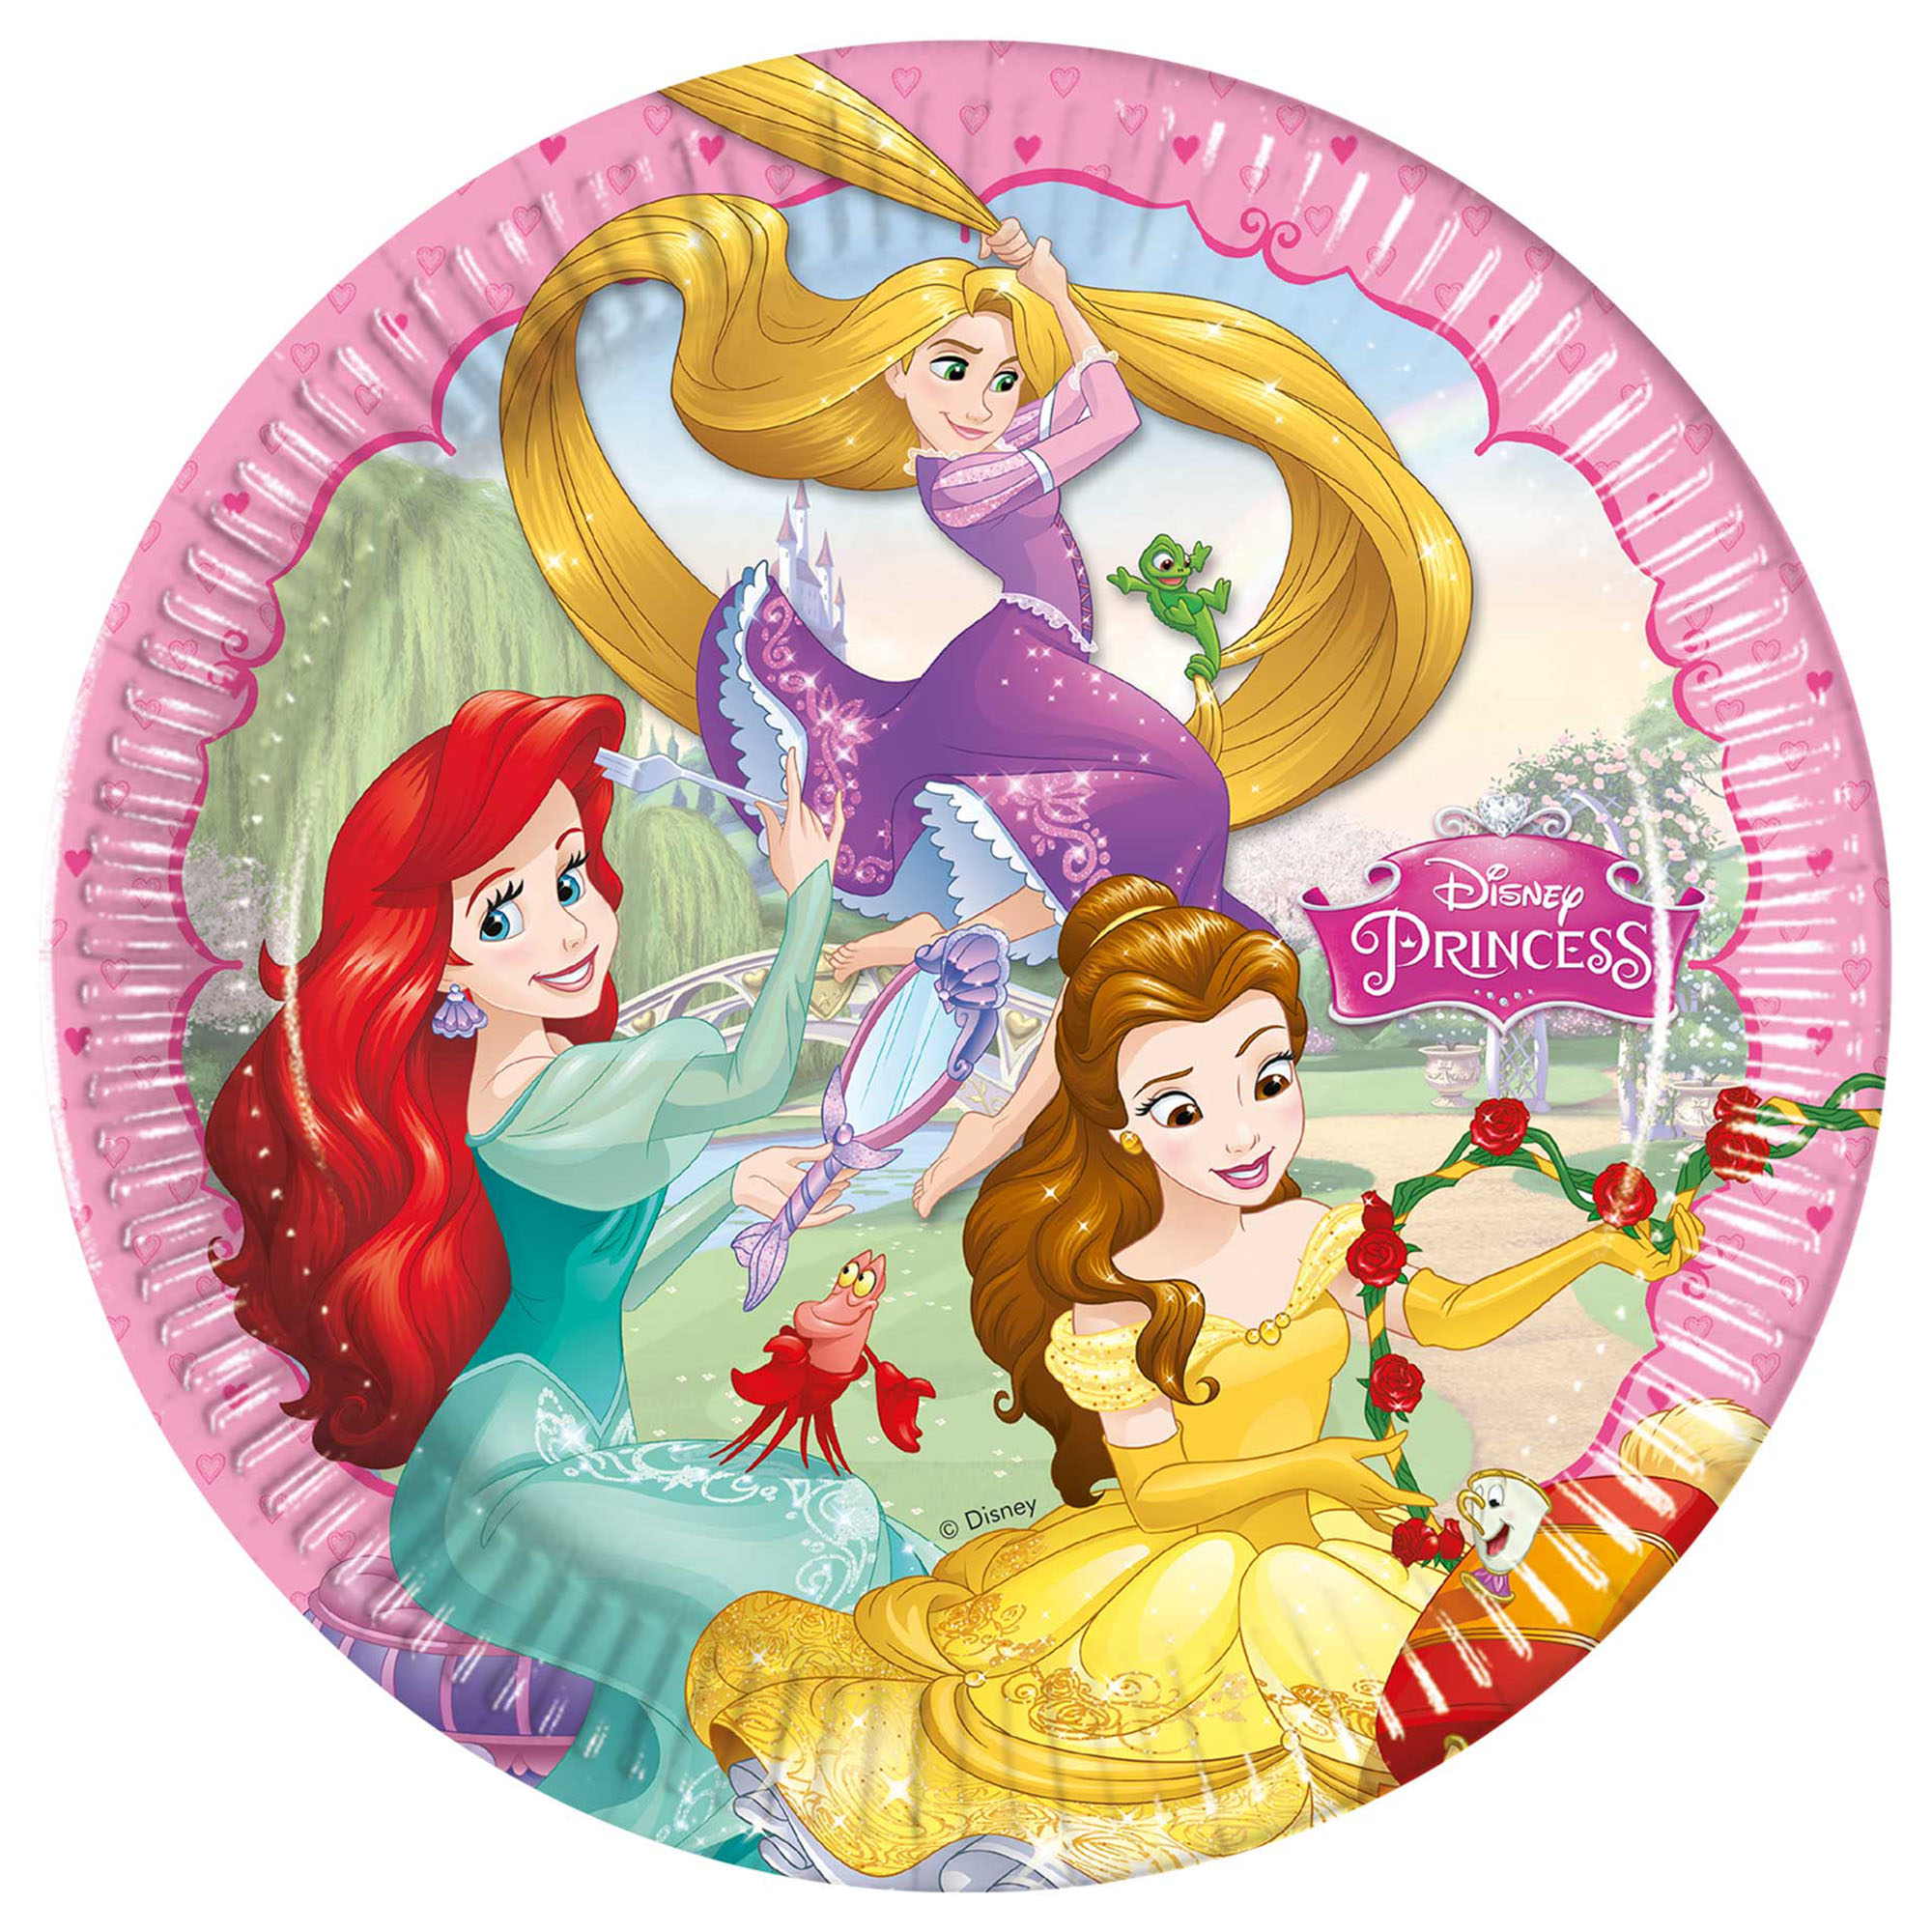 Disney Princess Party Tableware Bundle - 8 Guests